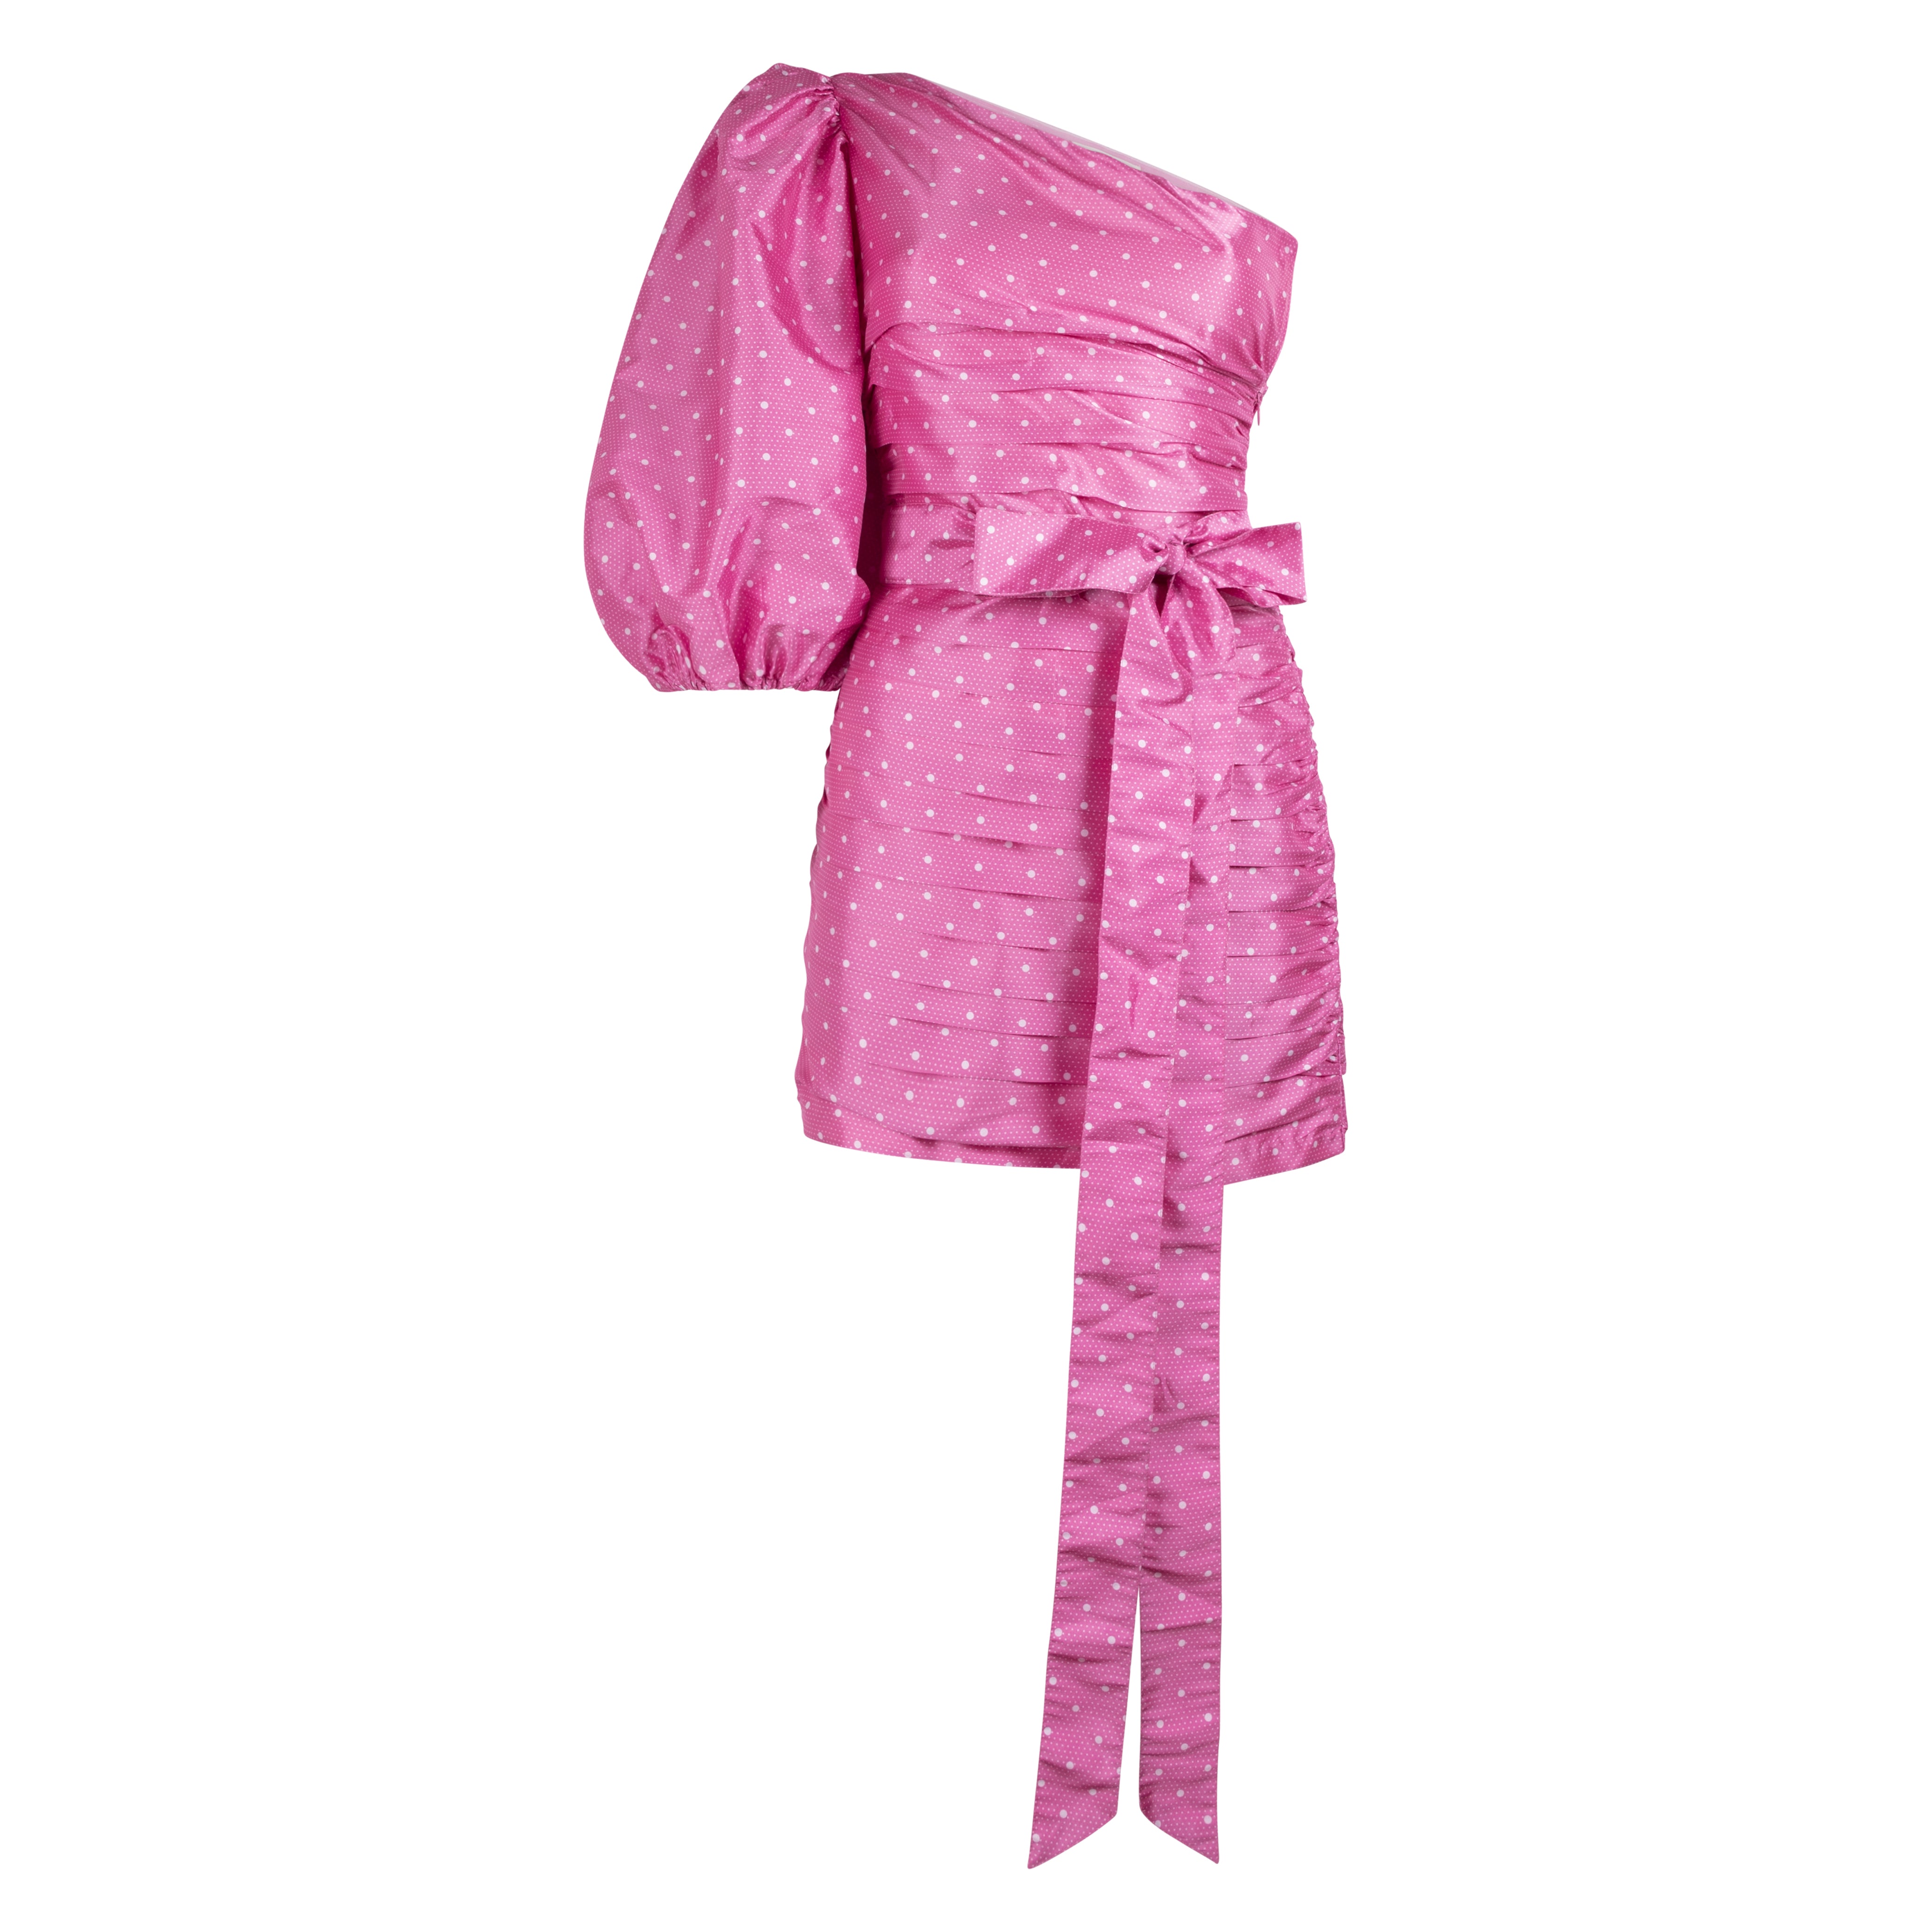 Something Borrowed LoveShackFancy Altie Dress Hot Pink Cherry to rent, kledingverhuur